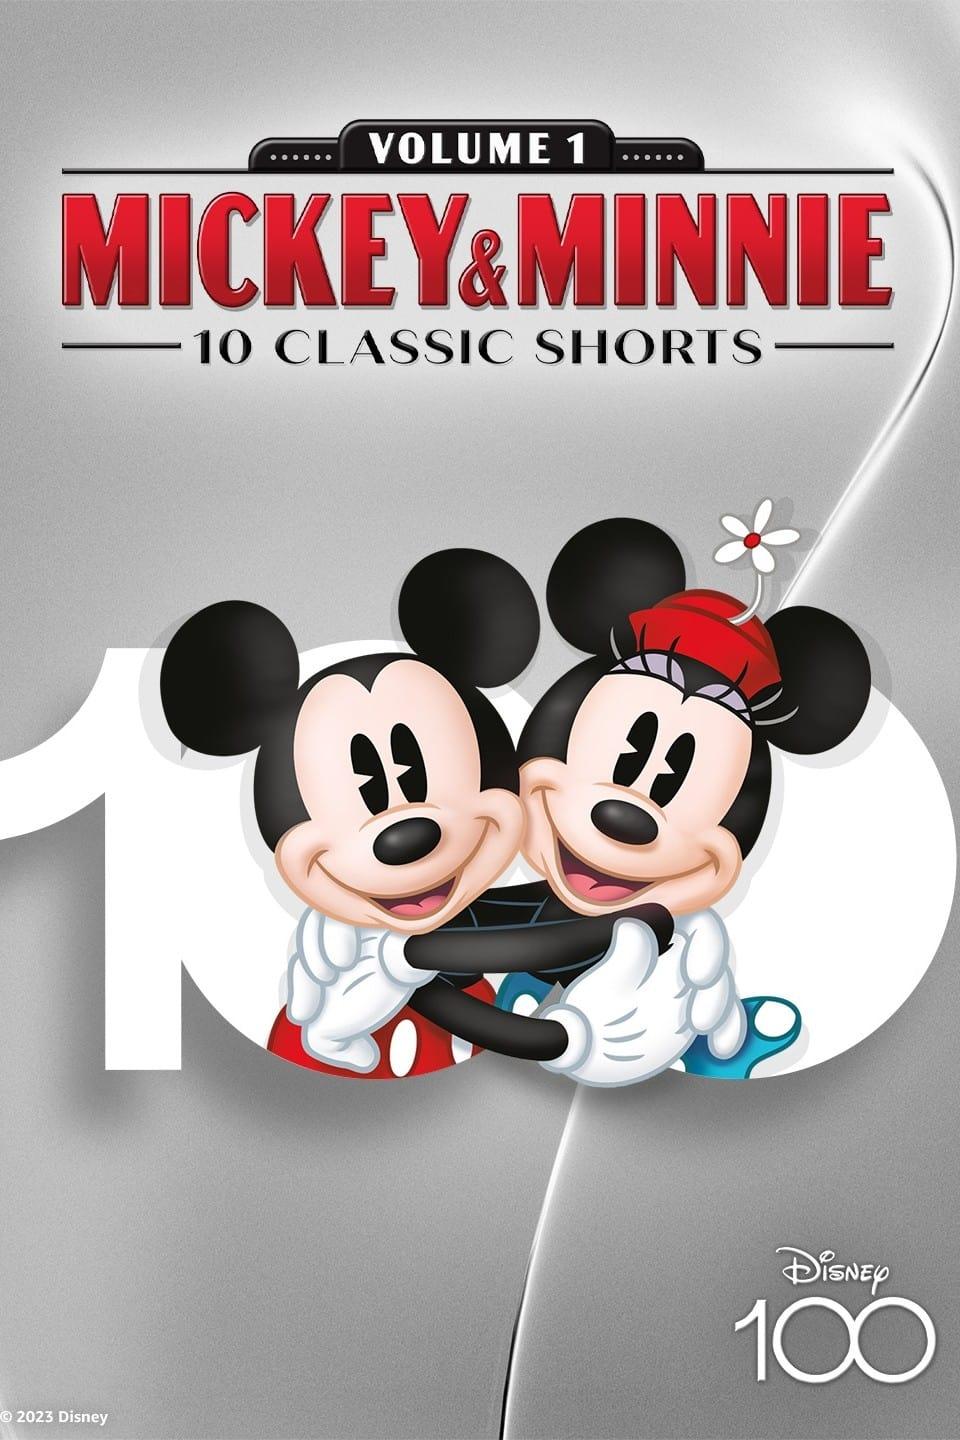 Mickey & Minnie 10 Classic Shorts (Volume 1) poster